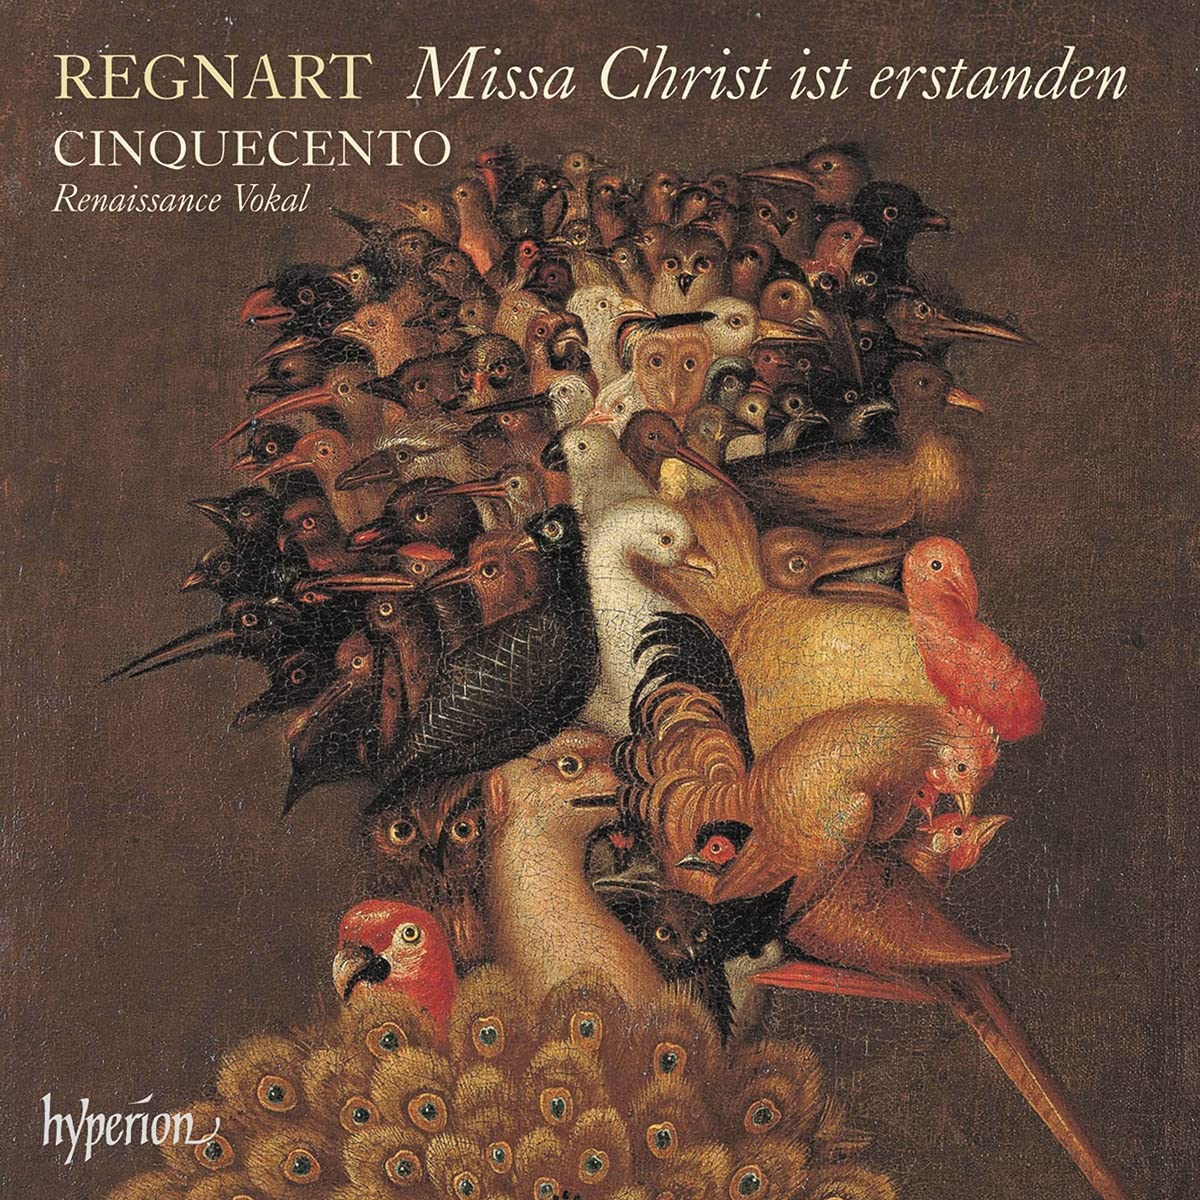 CD cover Regnart Missa Christ ist erstanden hyperion